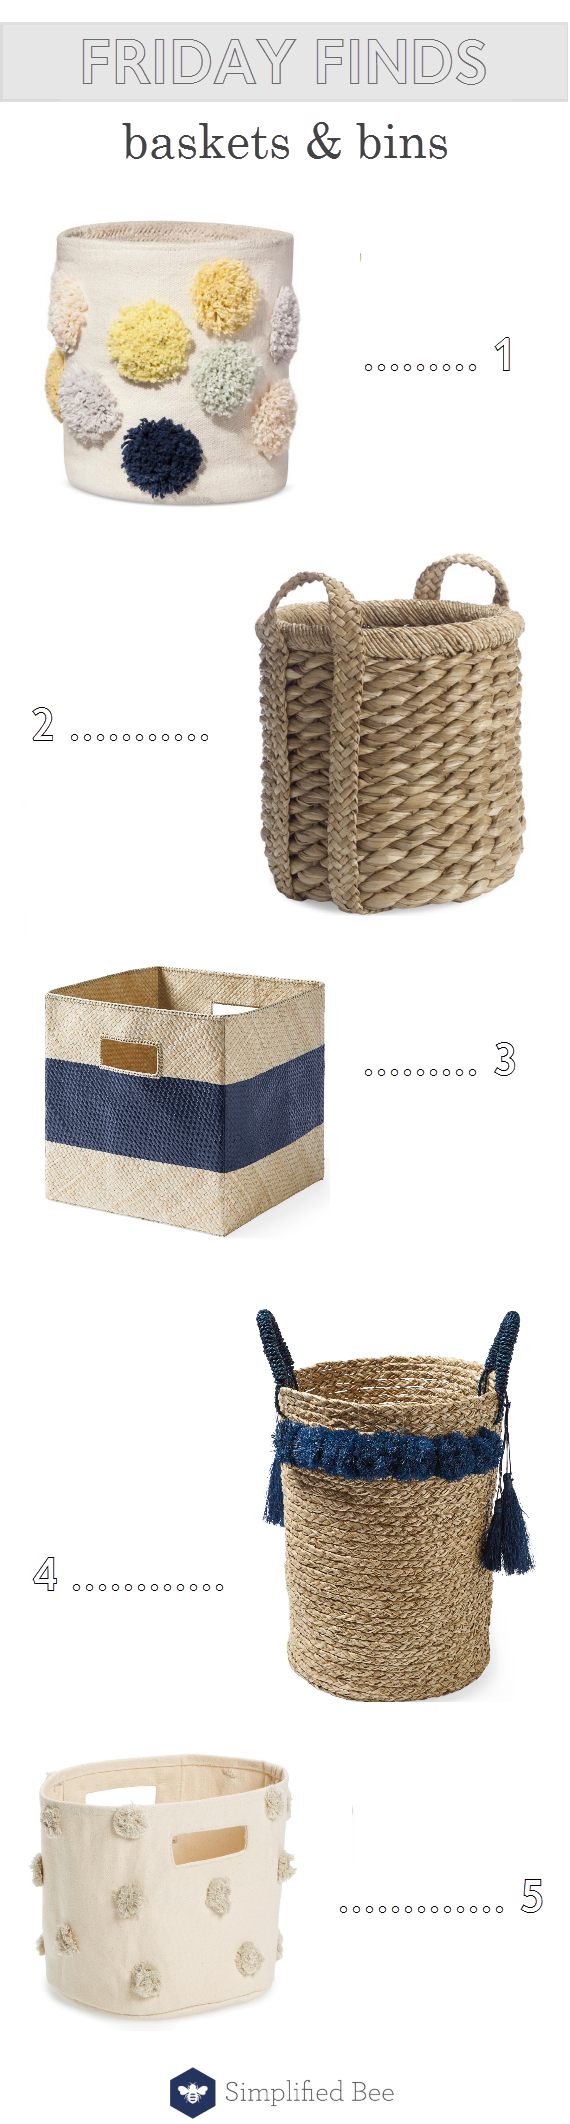 decorative baskets and bins // storage solutions // @simplifiedbee #storage